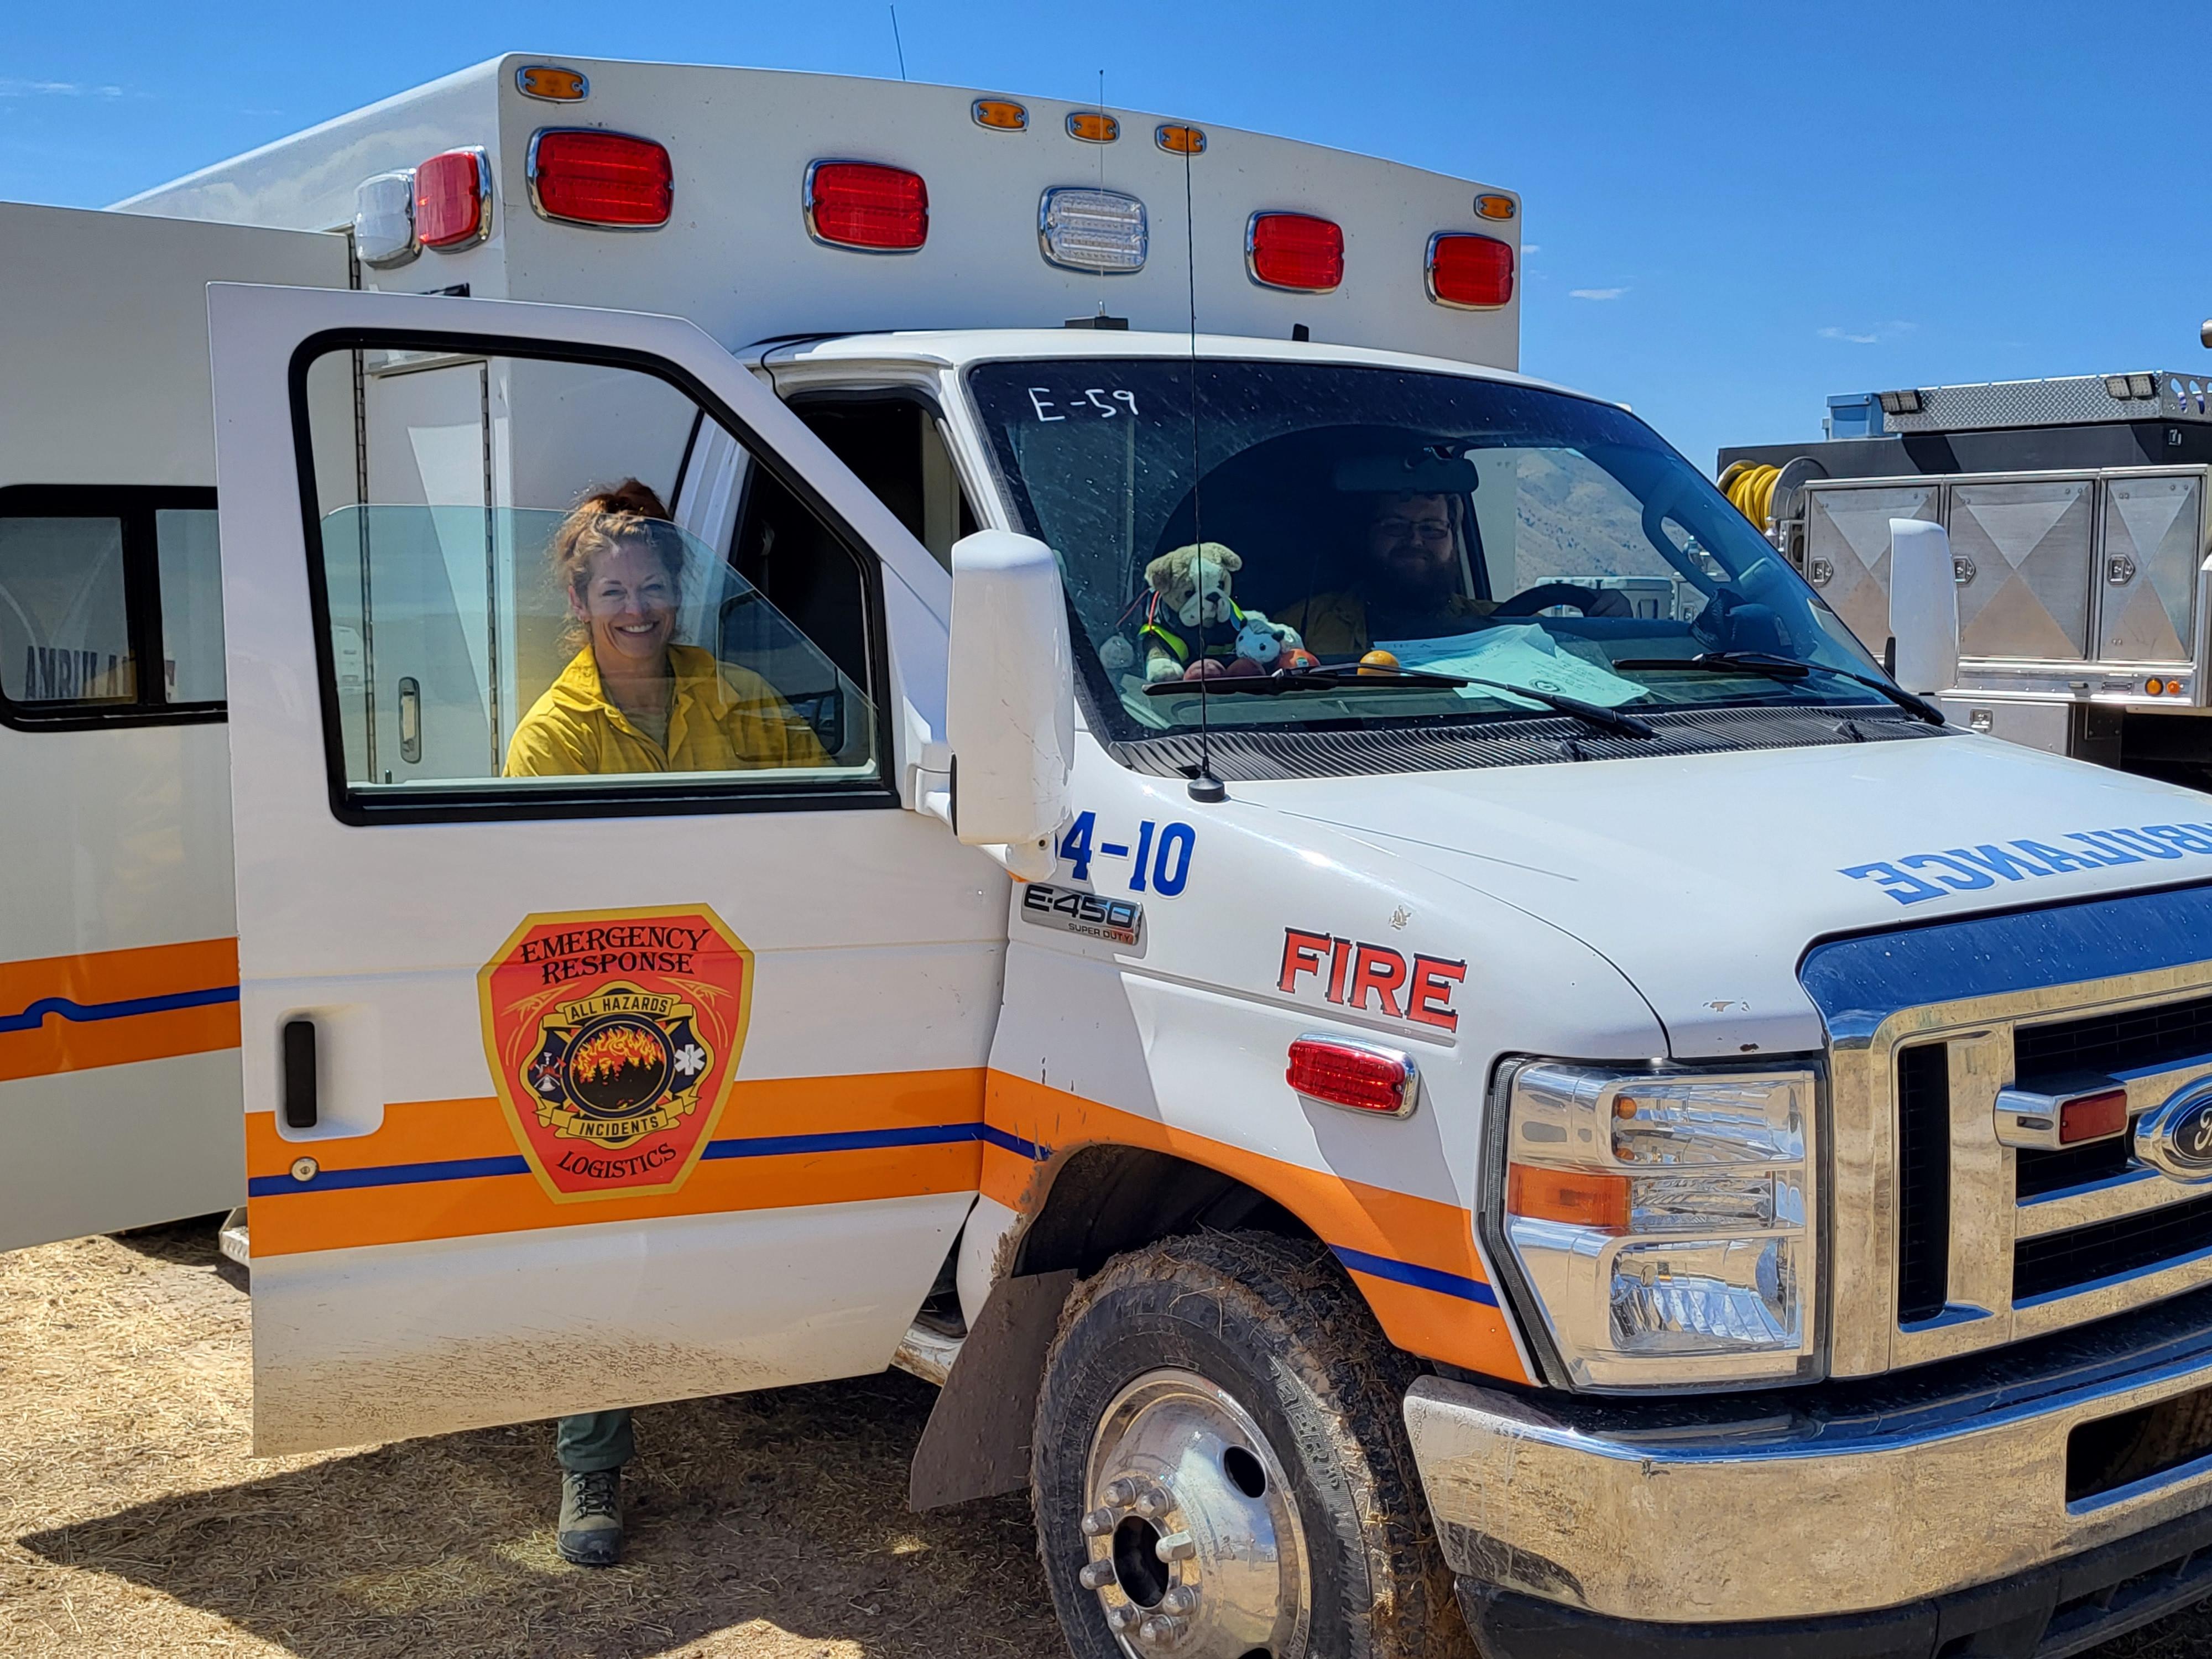 July 15 Emergency Response Ambulance